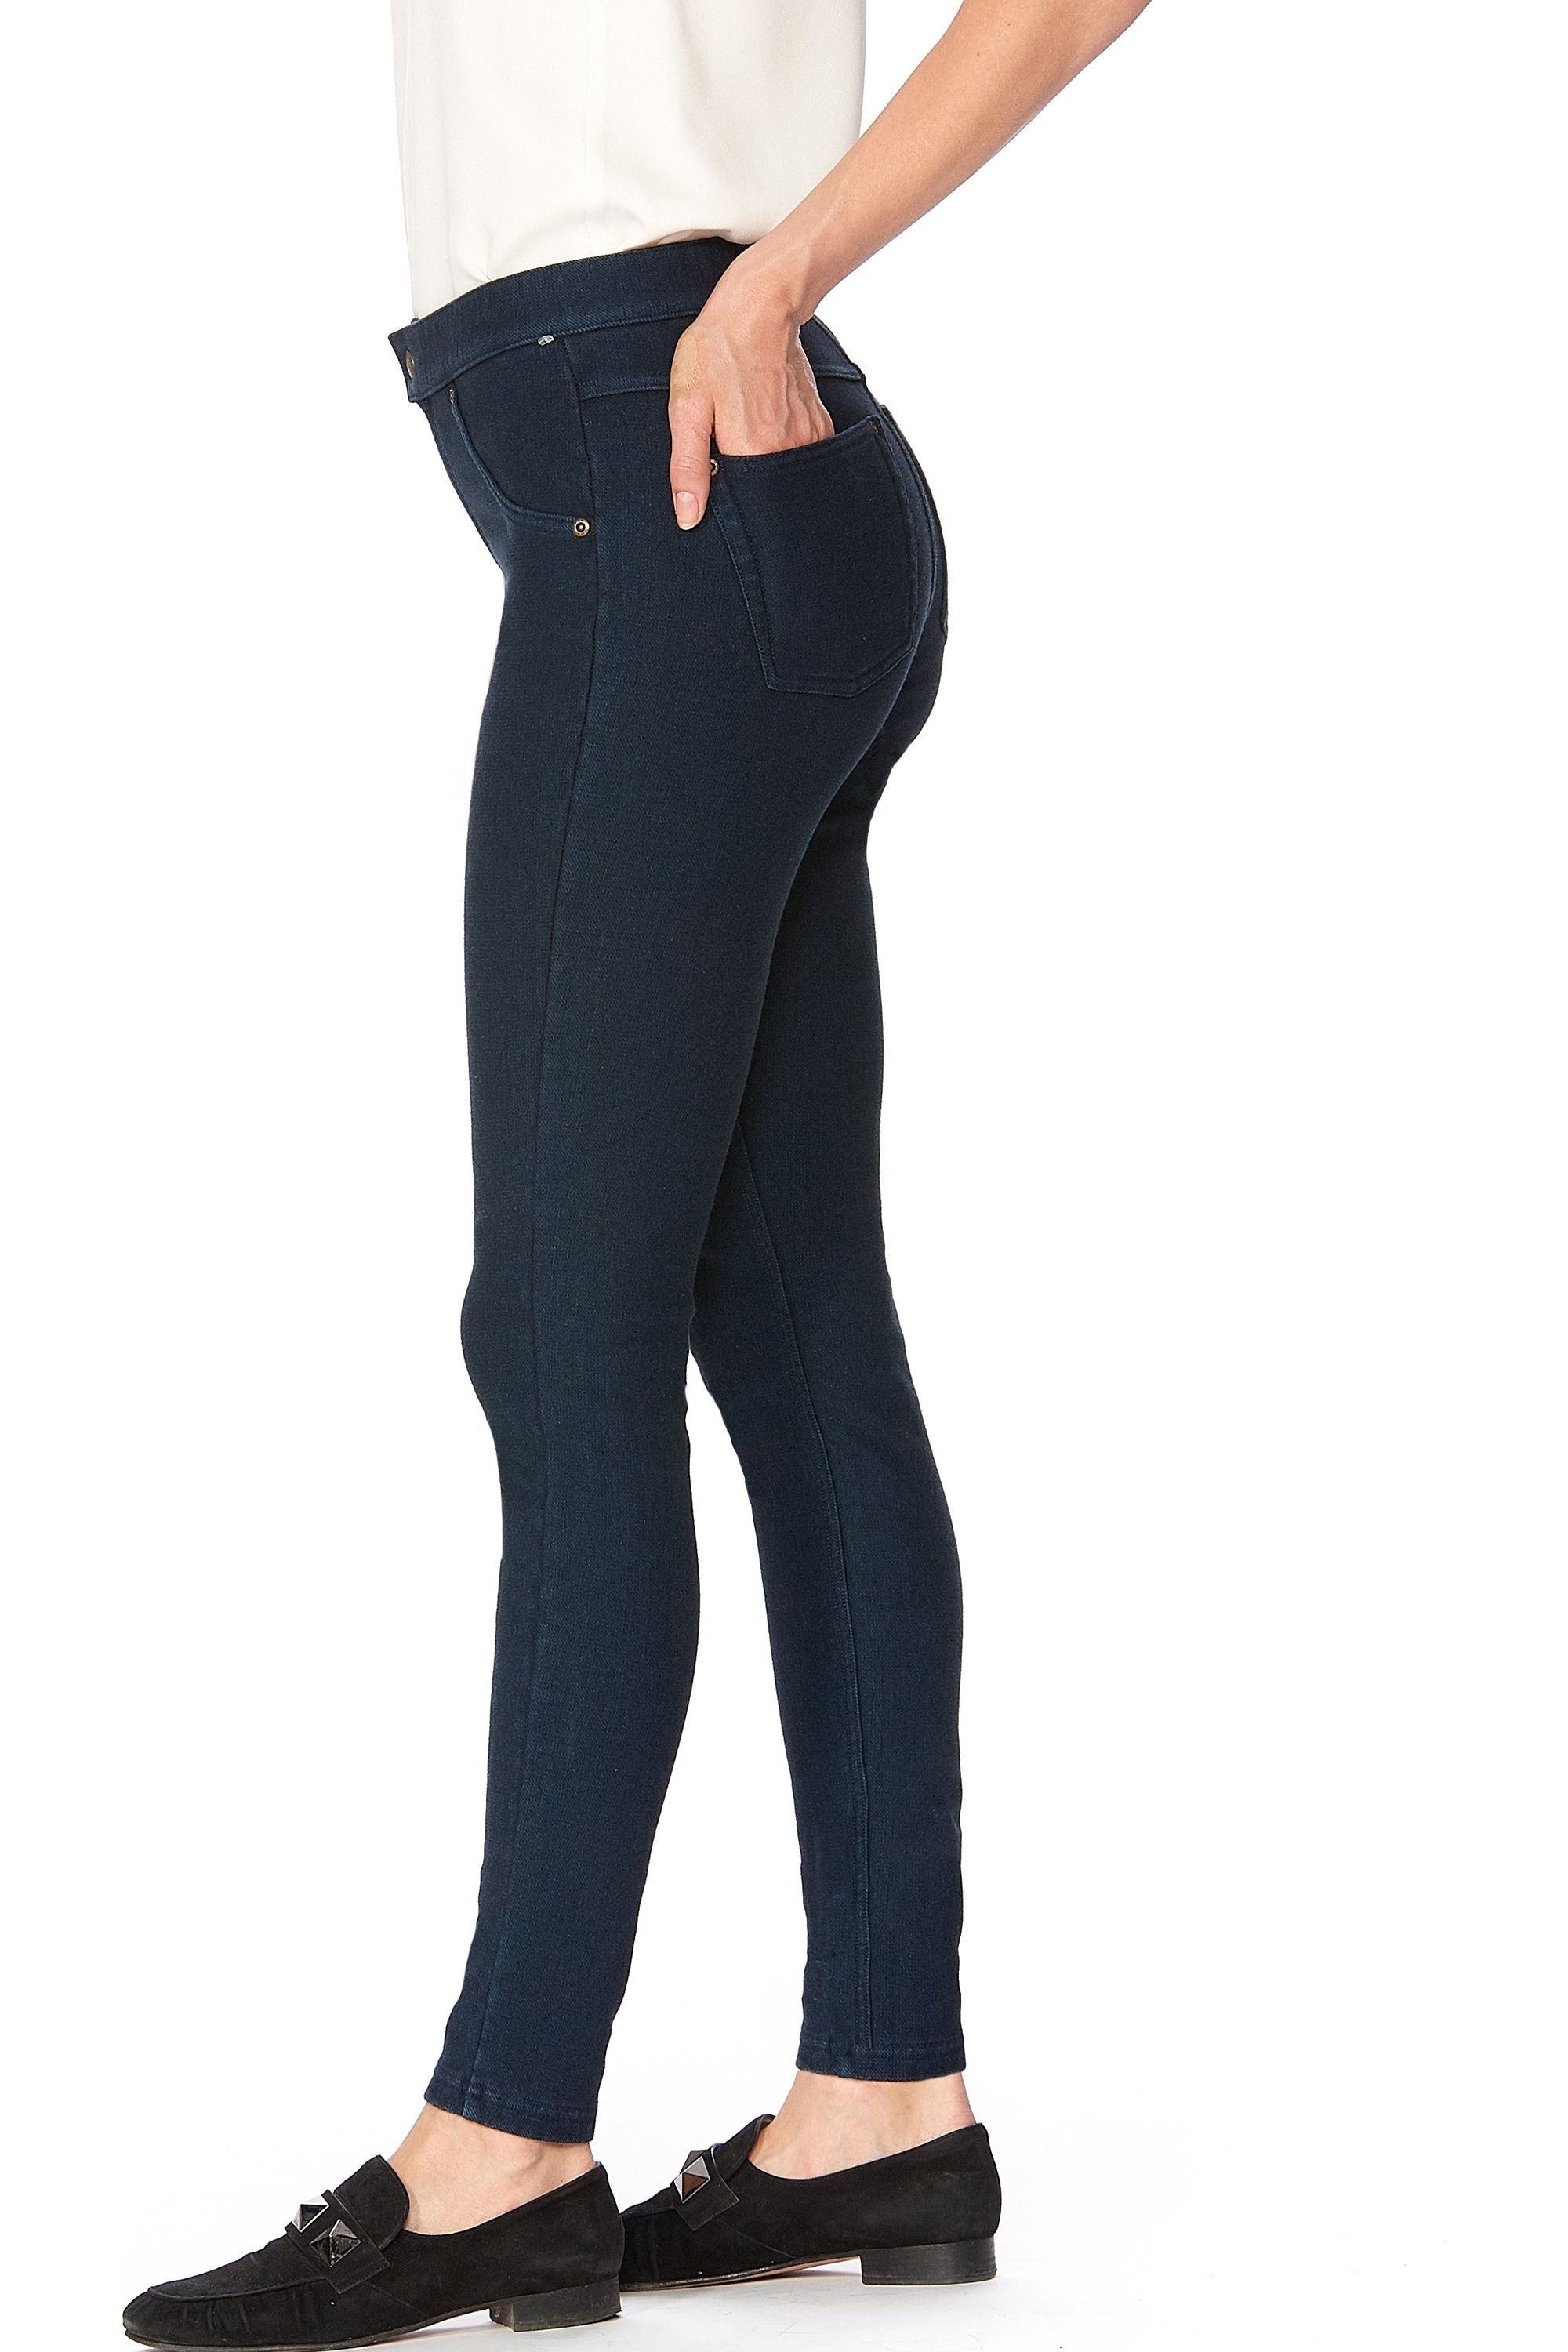 HUE Fleece-Lined Denim Leggings - Style 21254 – Close To You Boutique